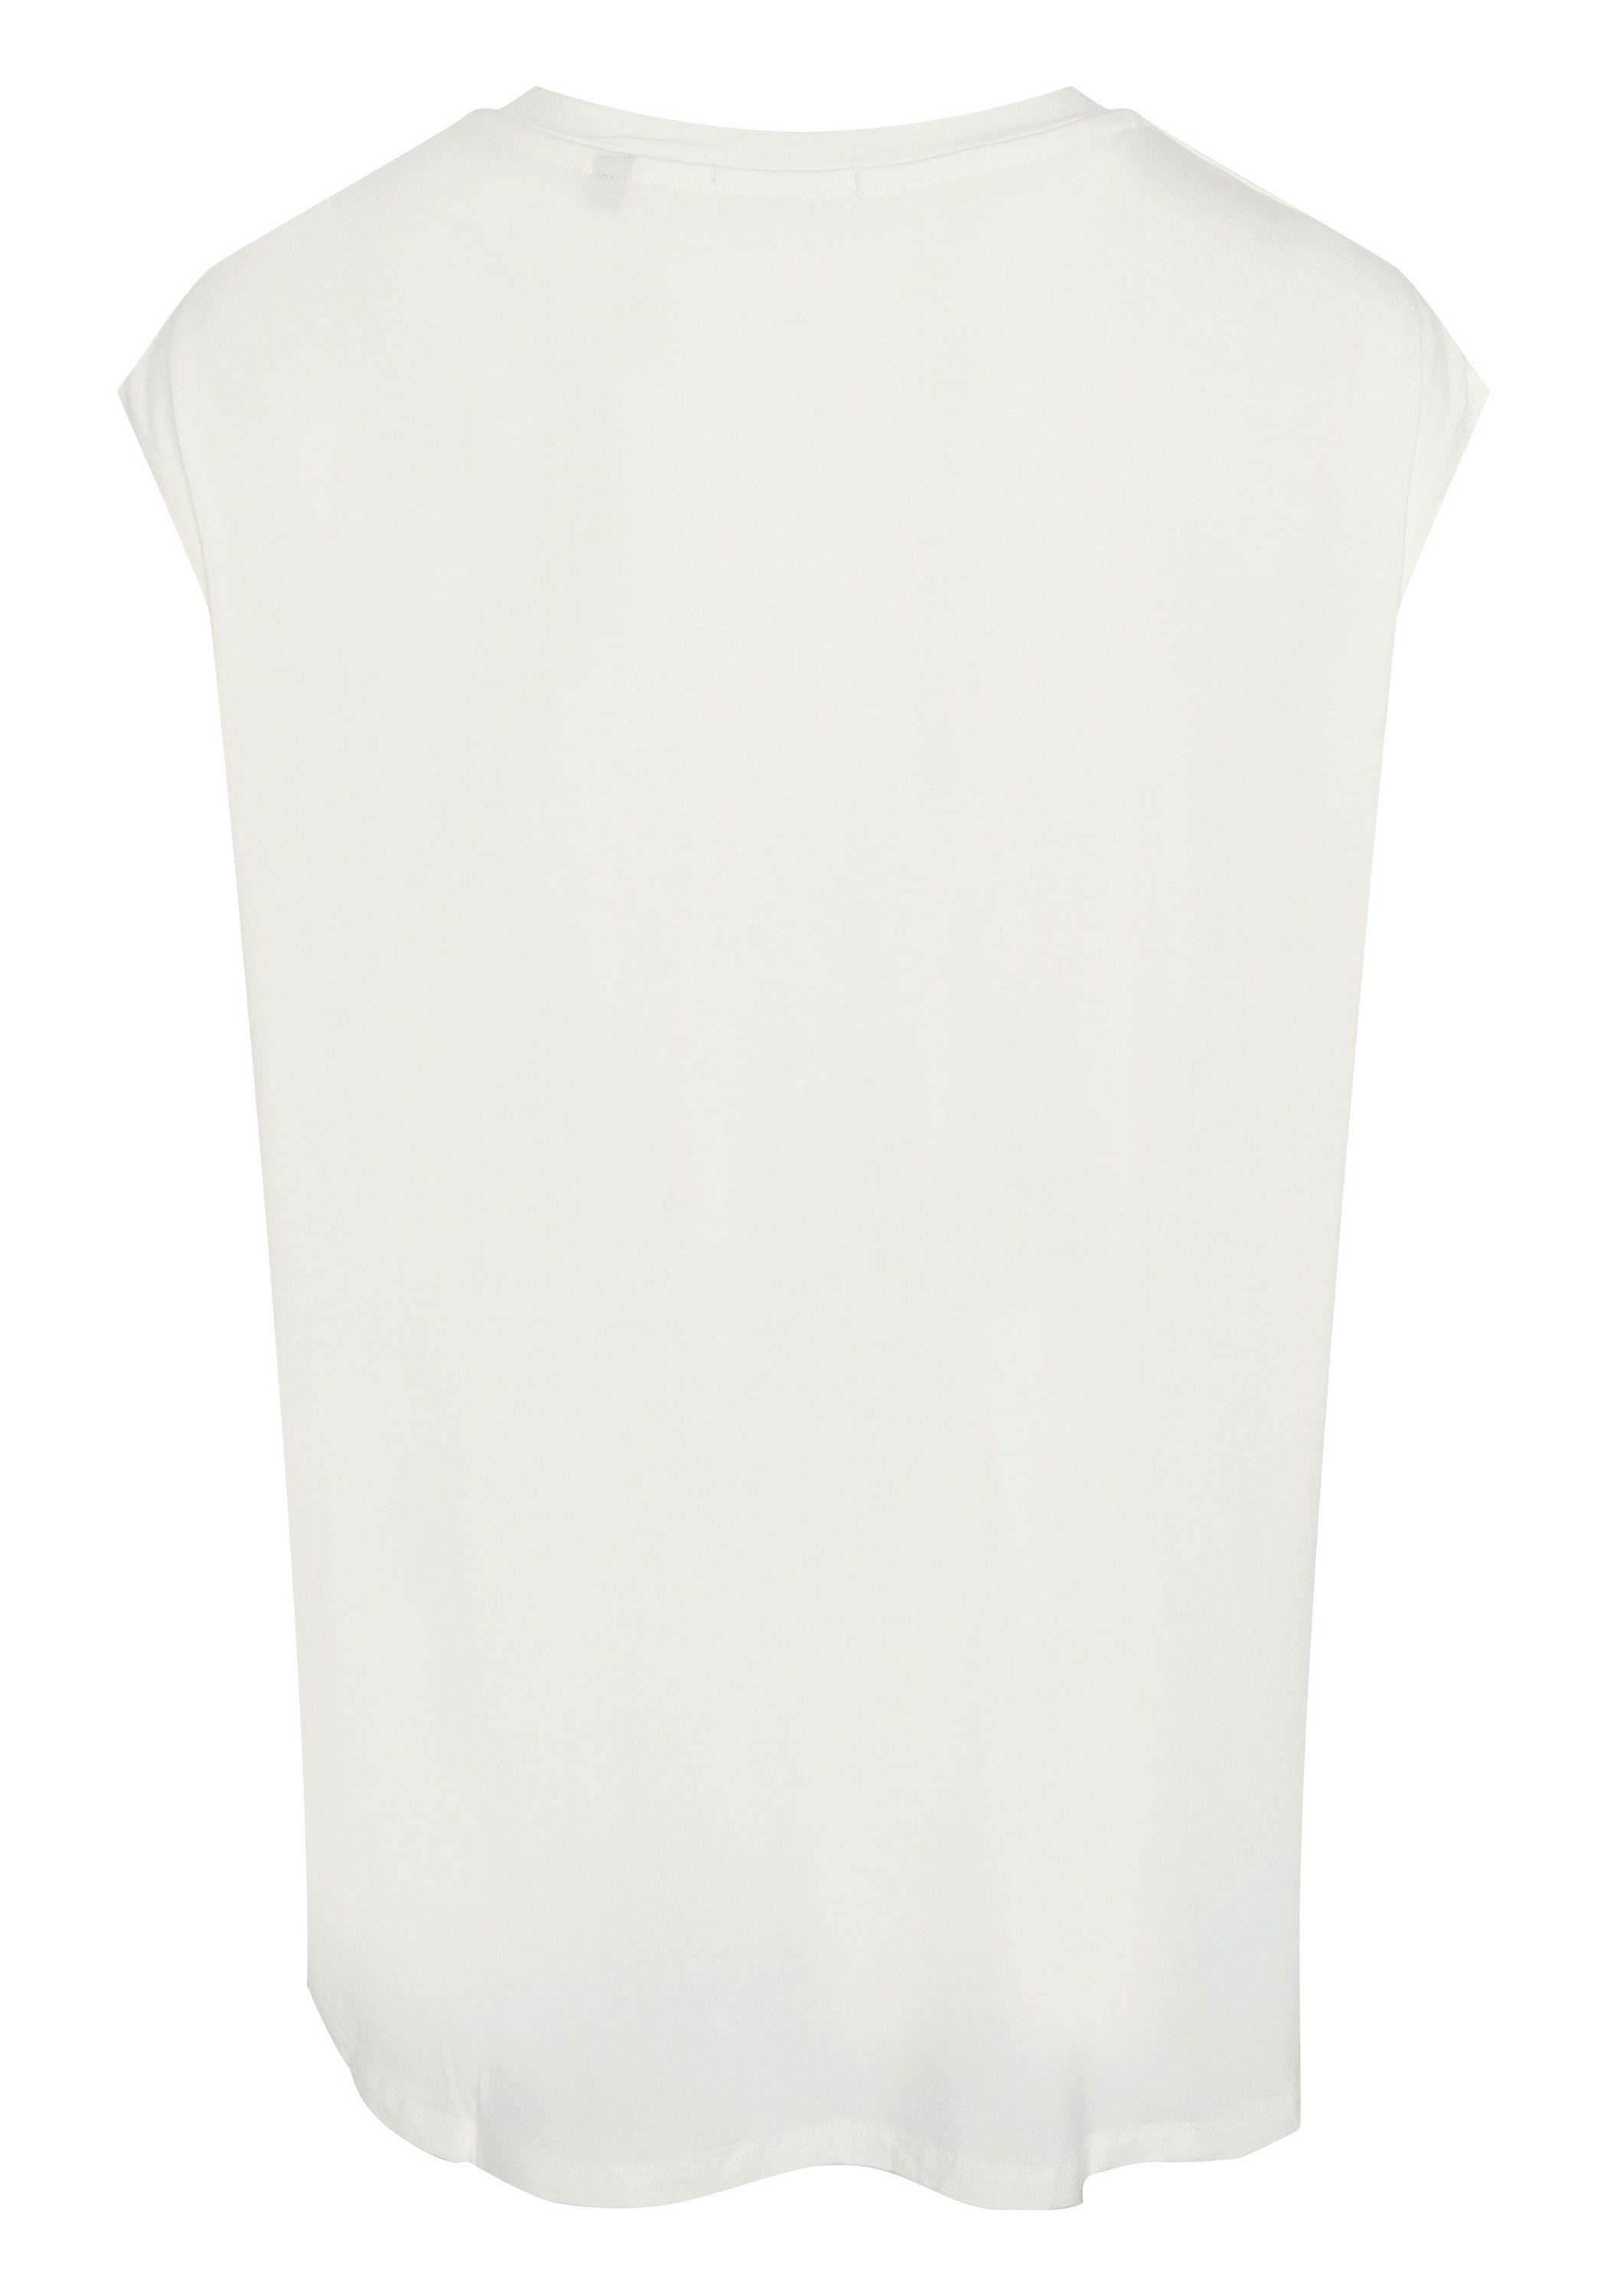 Star mit 1 Chiemsee T-Shirt Labelprint Print-Shirt aus Viskose-Elasthanmix White